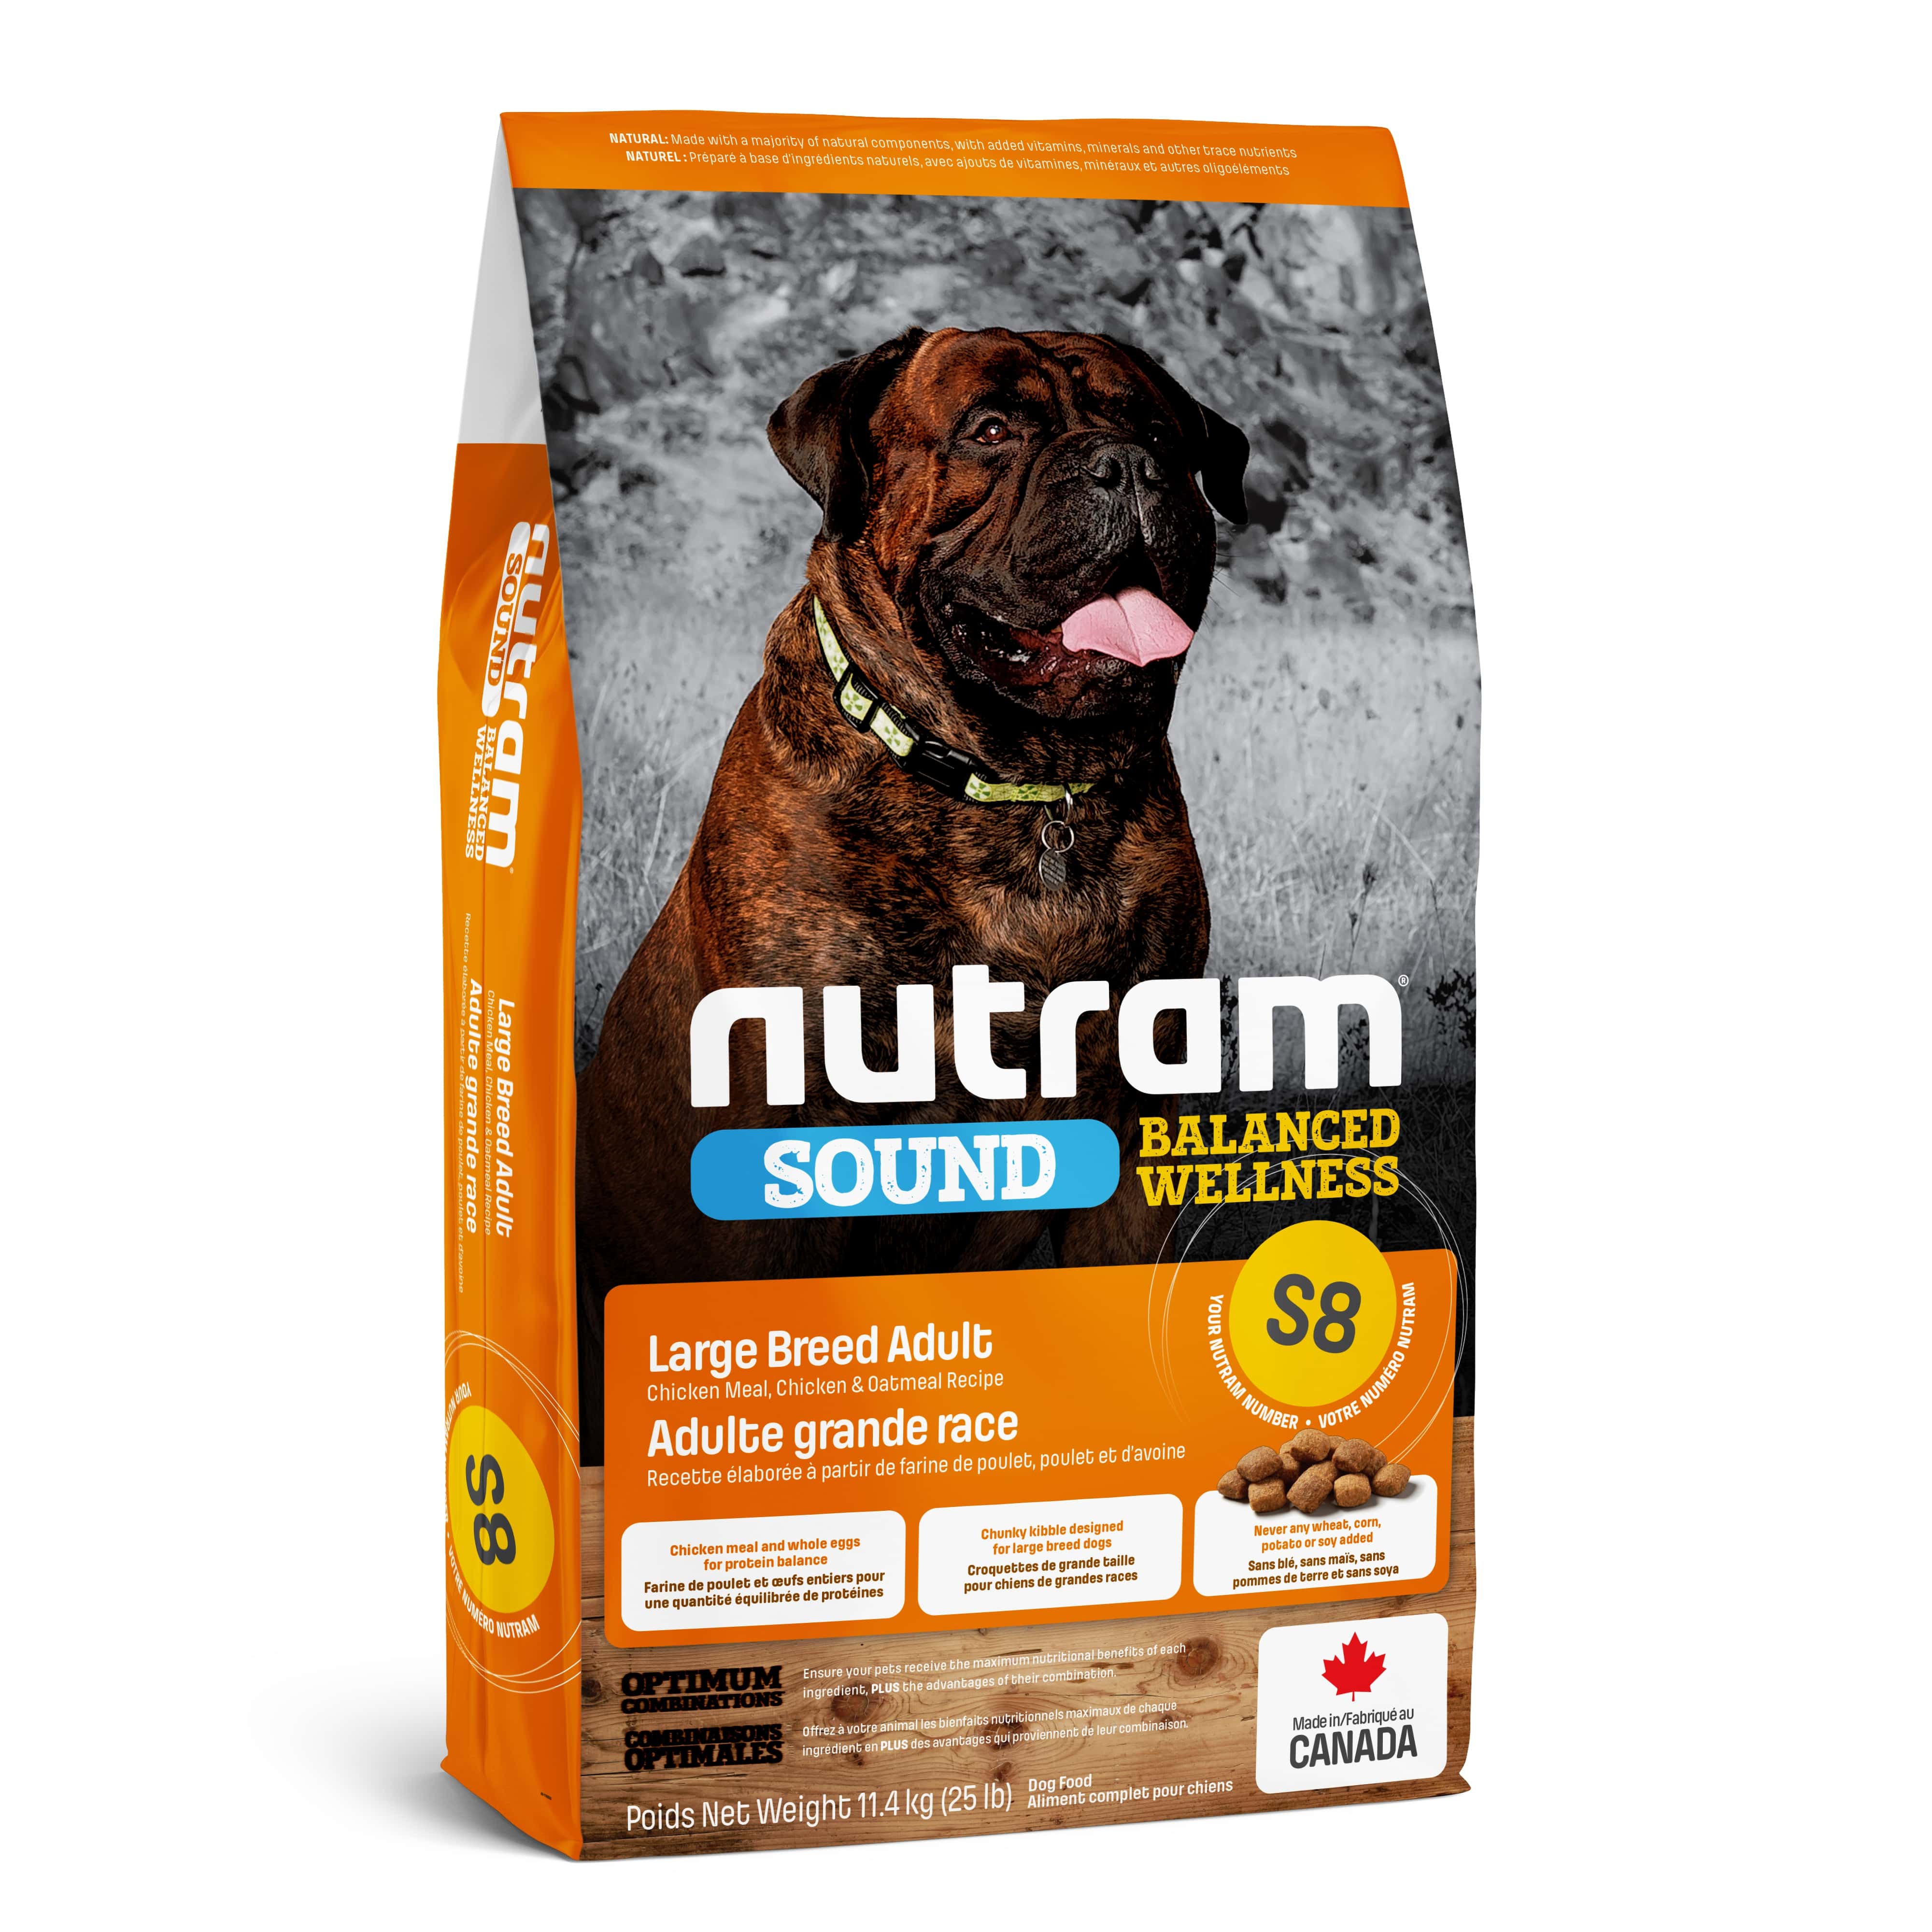 S8 Nutram Sound Balanced Wellness® Large Breed Adult Dog Food